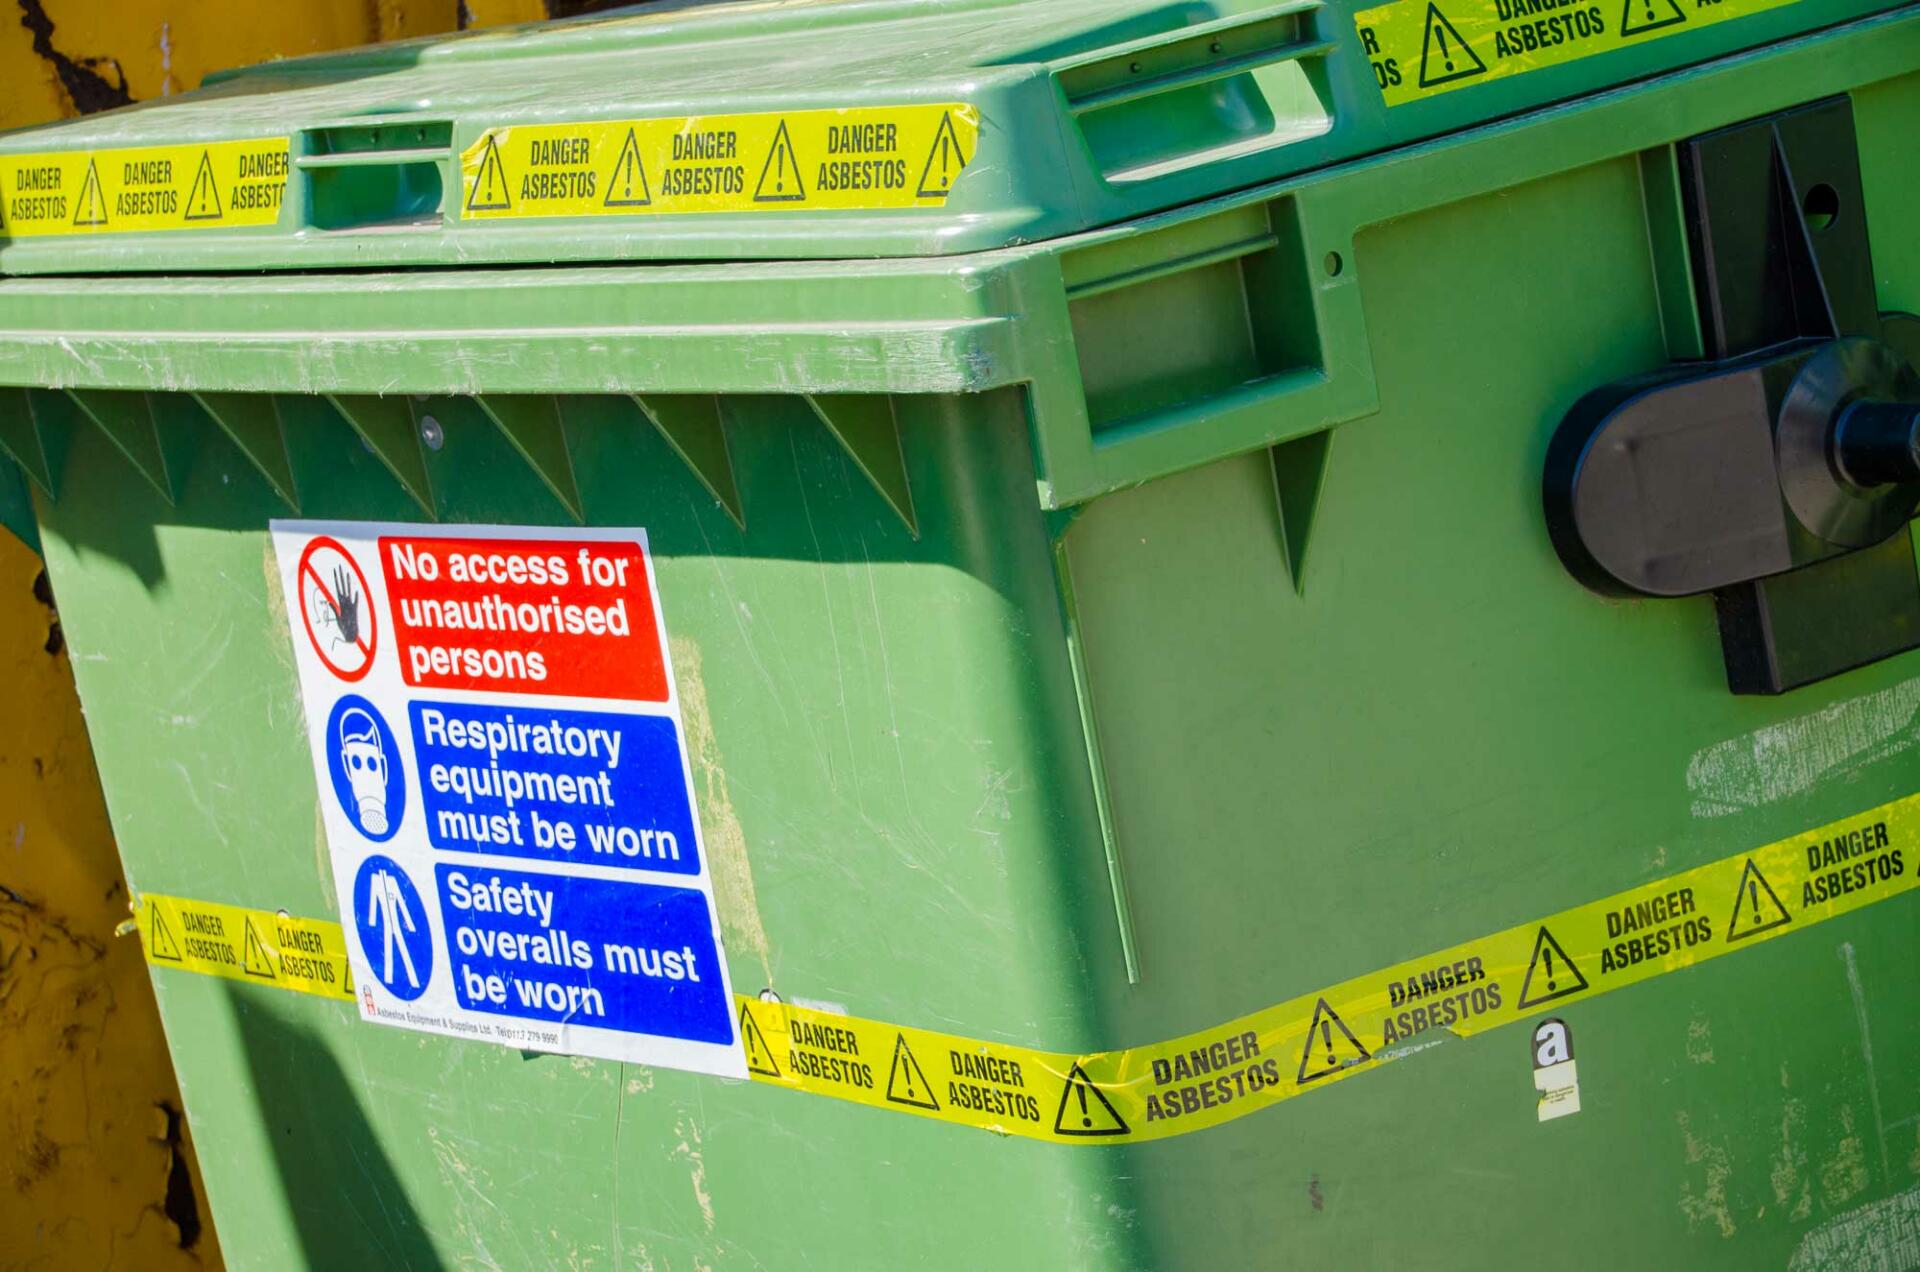 Asbestos waste disposal bin